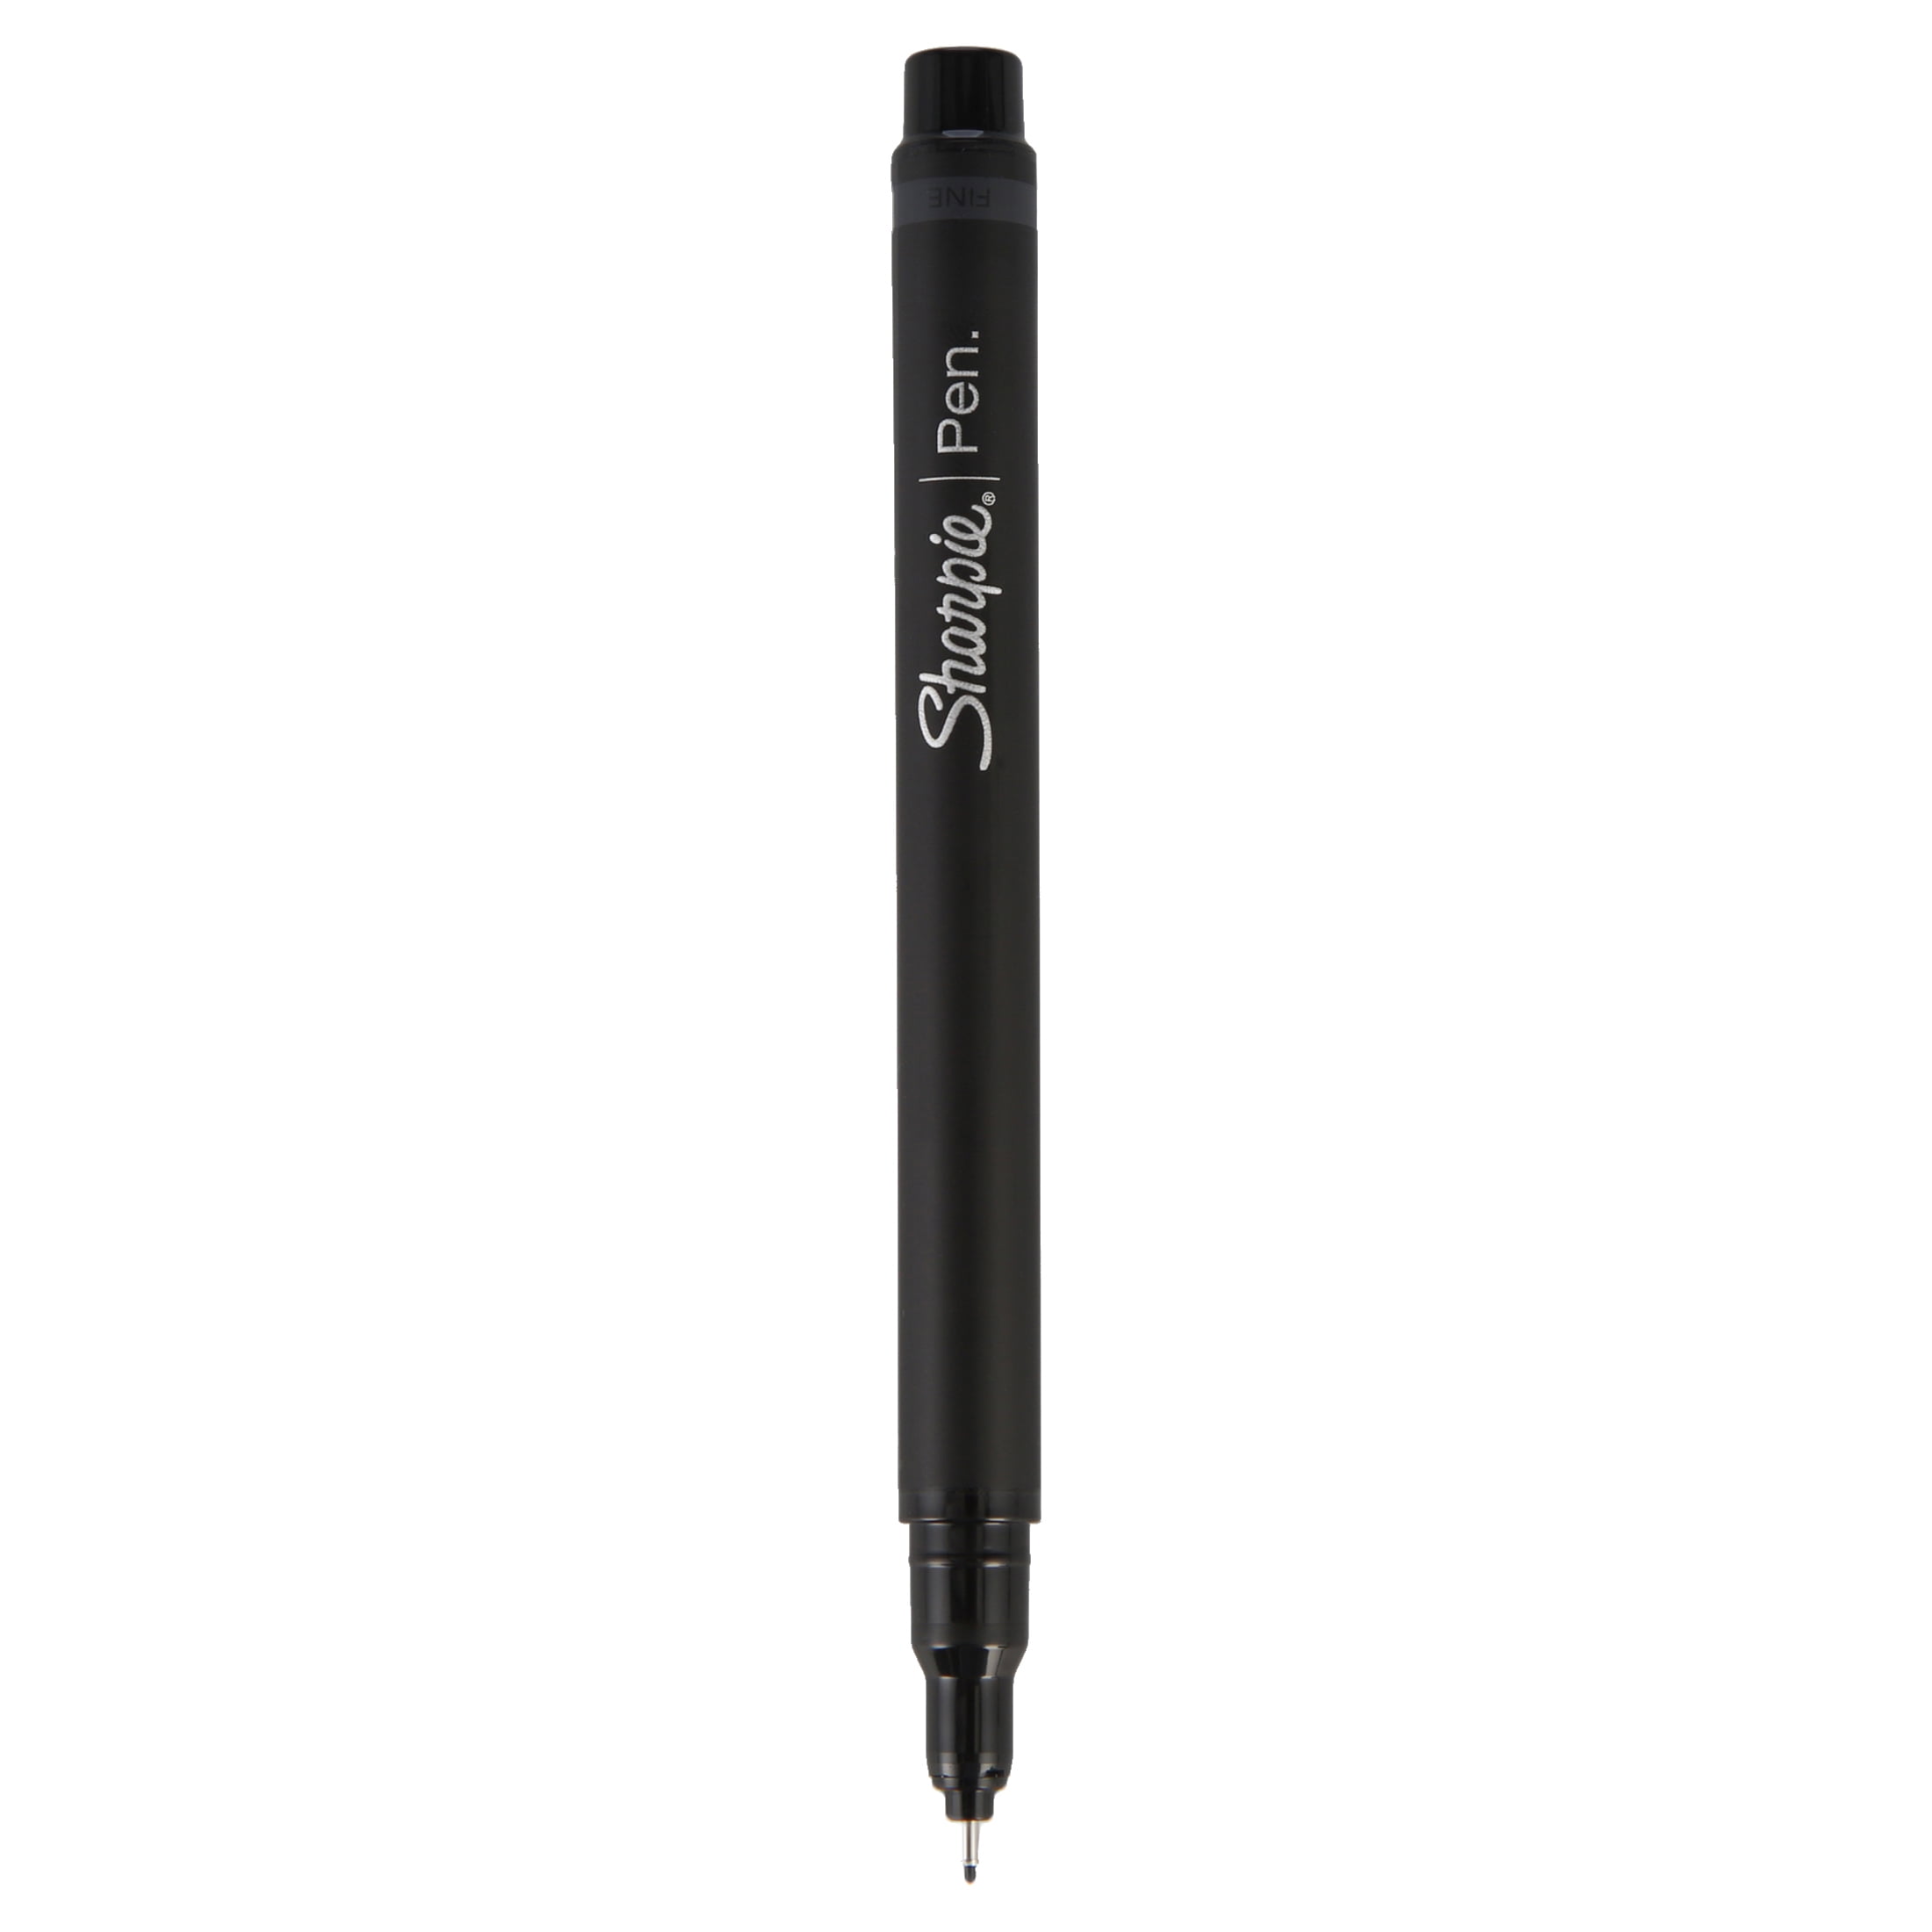 Sharpie Fine Point Writing Pen Open Stock-Black; 12 Total